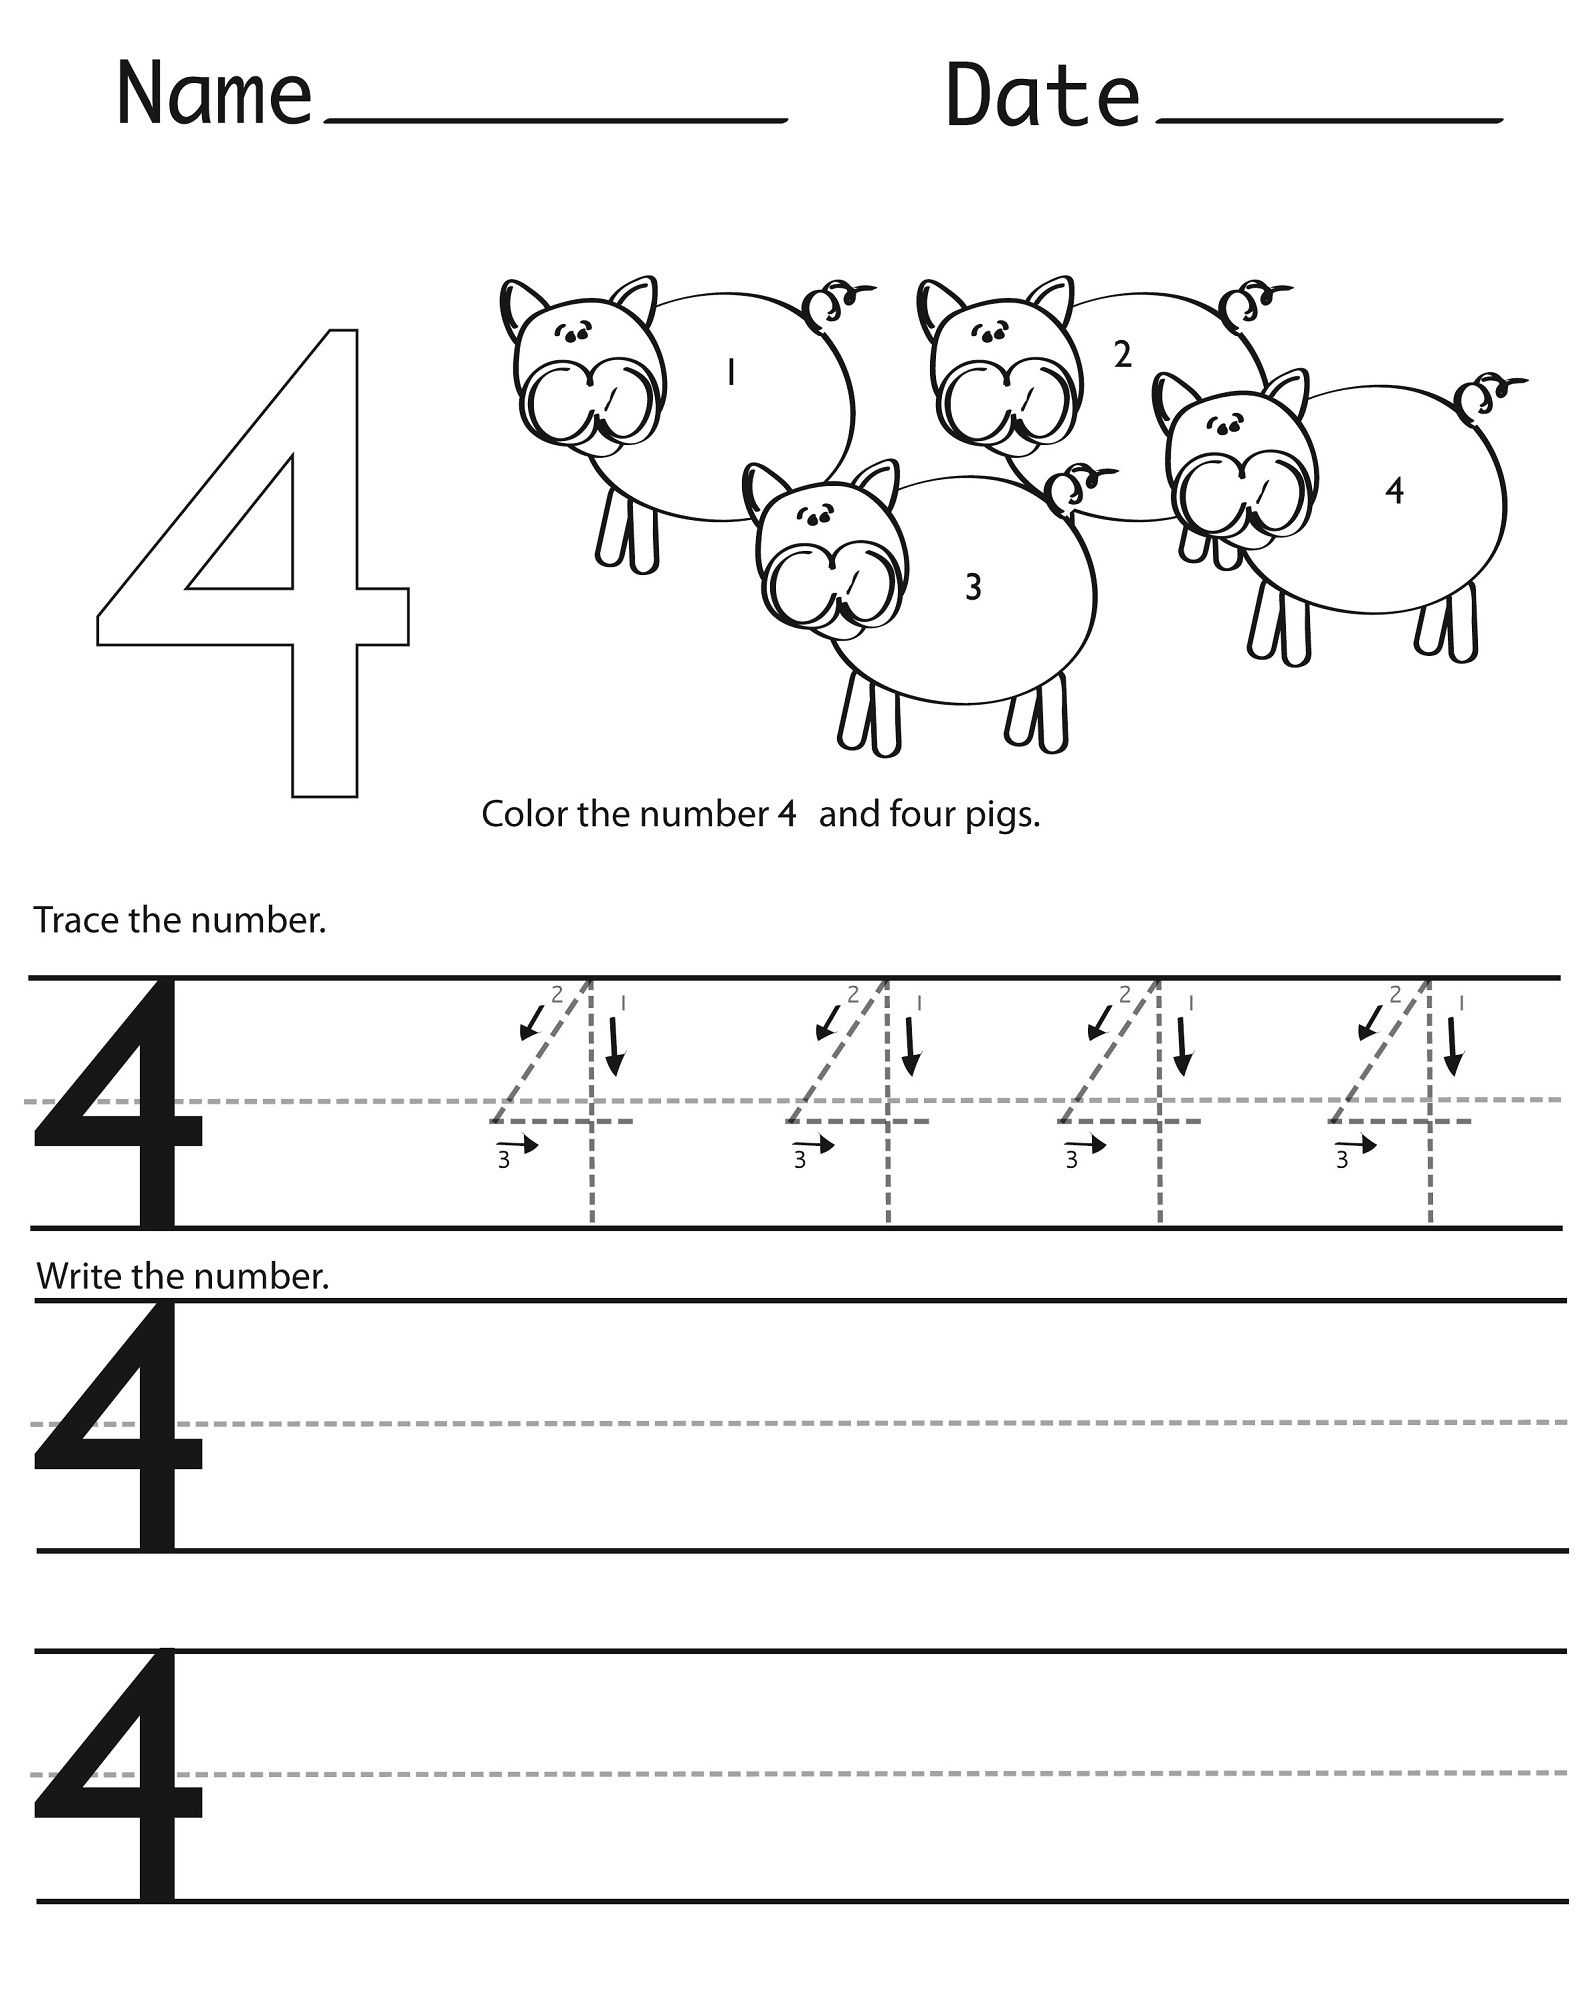 Winter Worksheets for Preschoolers and Number 4 Worksheets for Children Activity Shelter